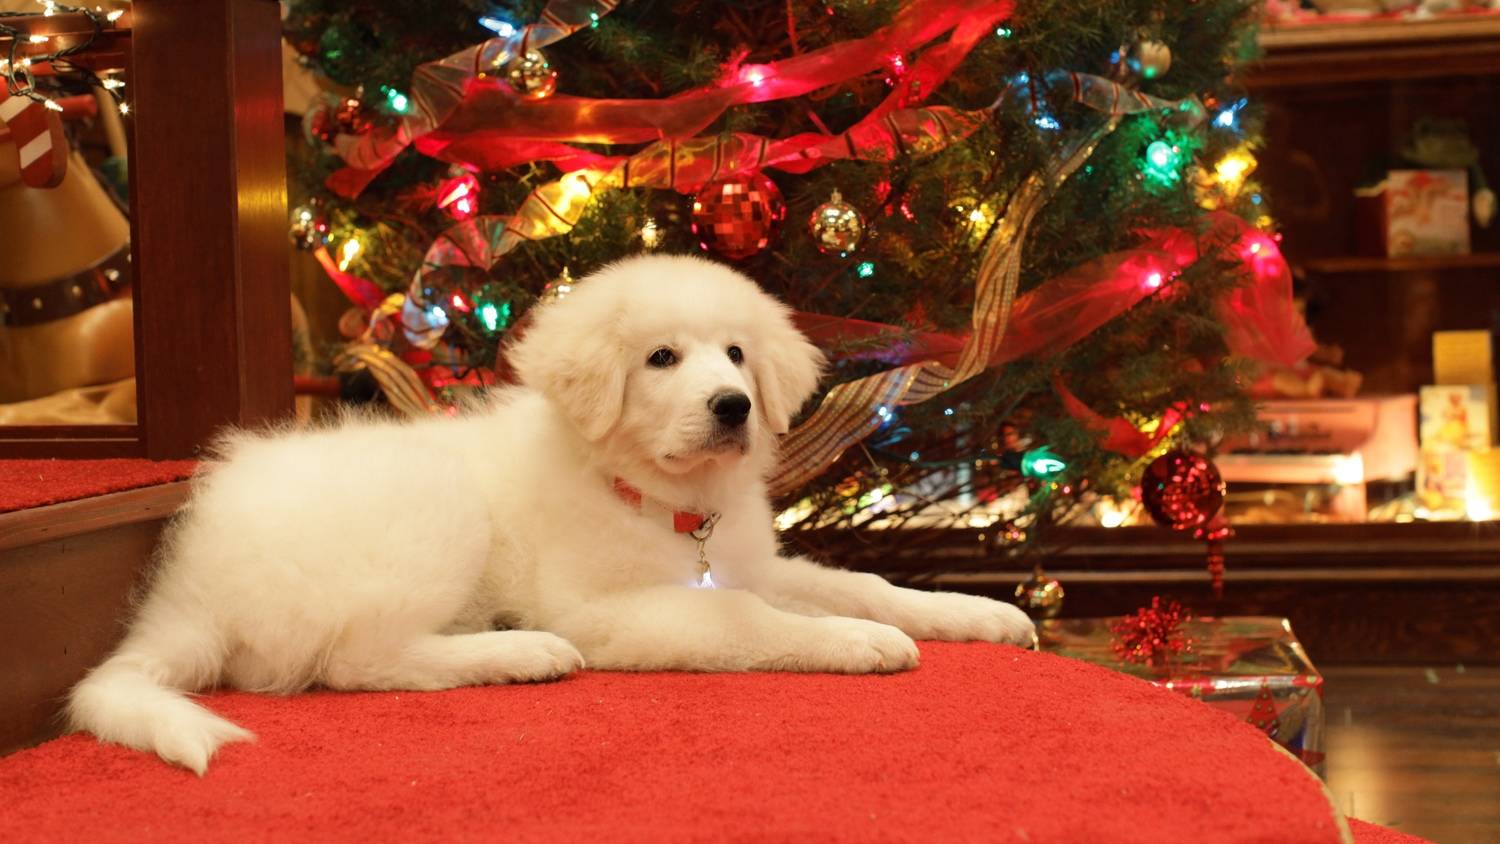 Santa Paws puppy from Disney Christmas movie